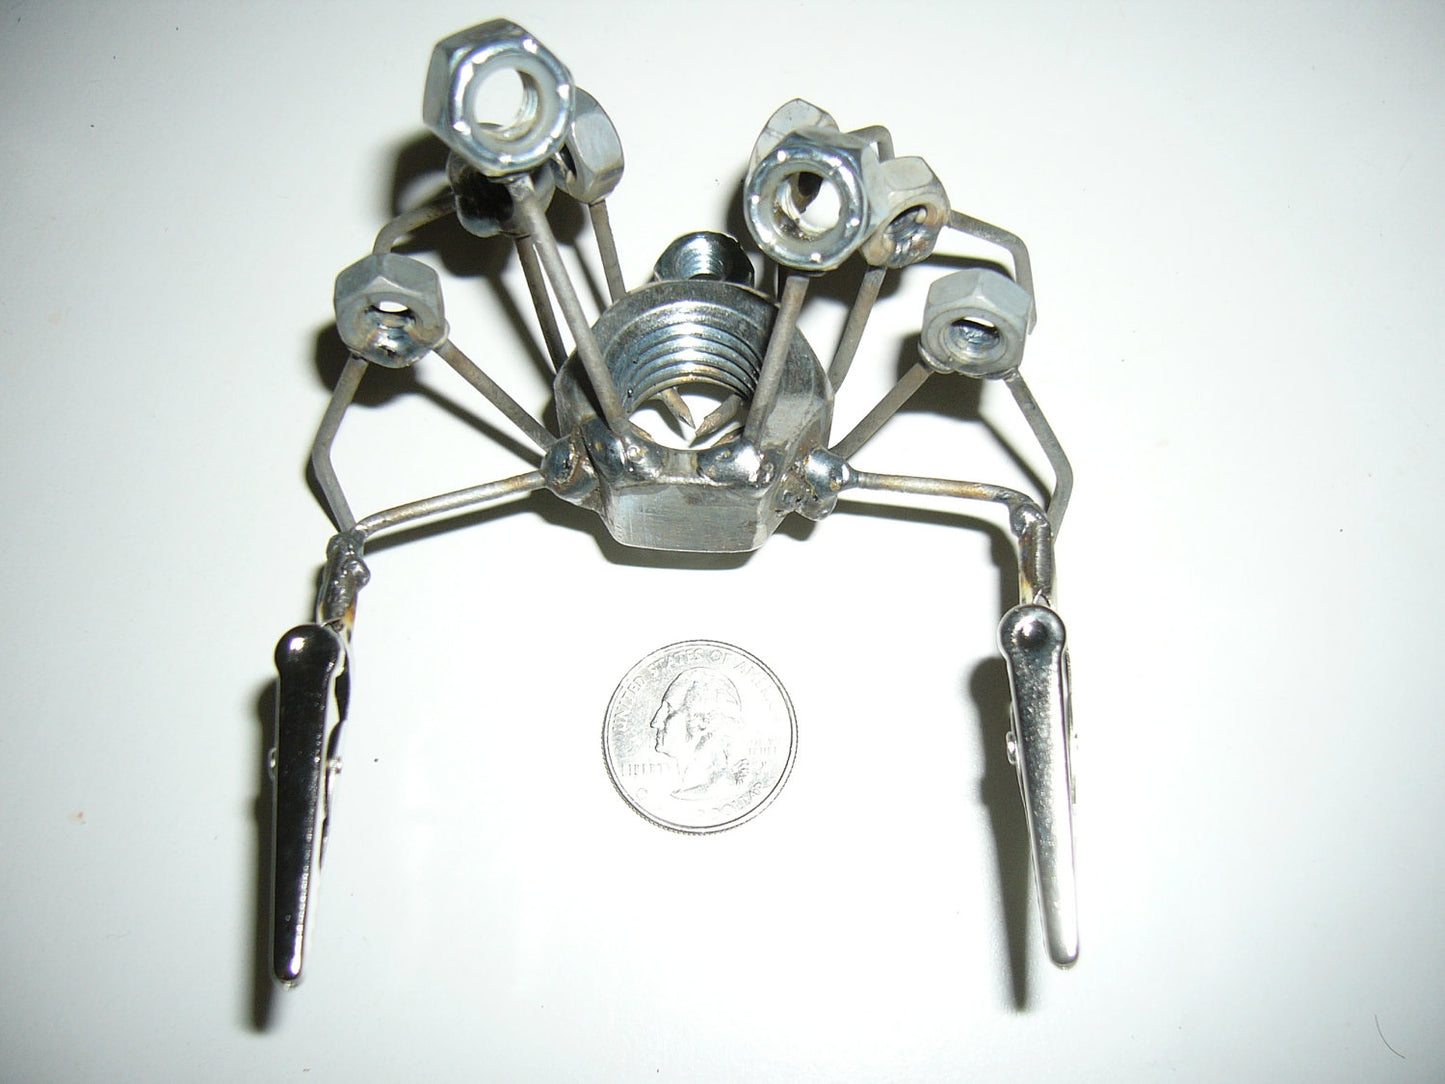 Blue Crab Metal Sculpture, Miniature figurine